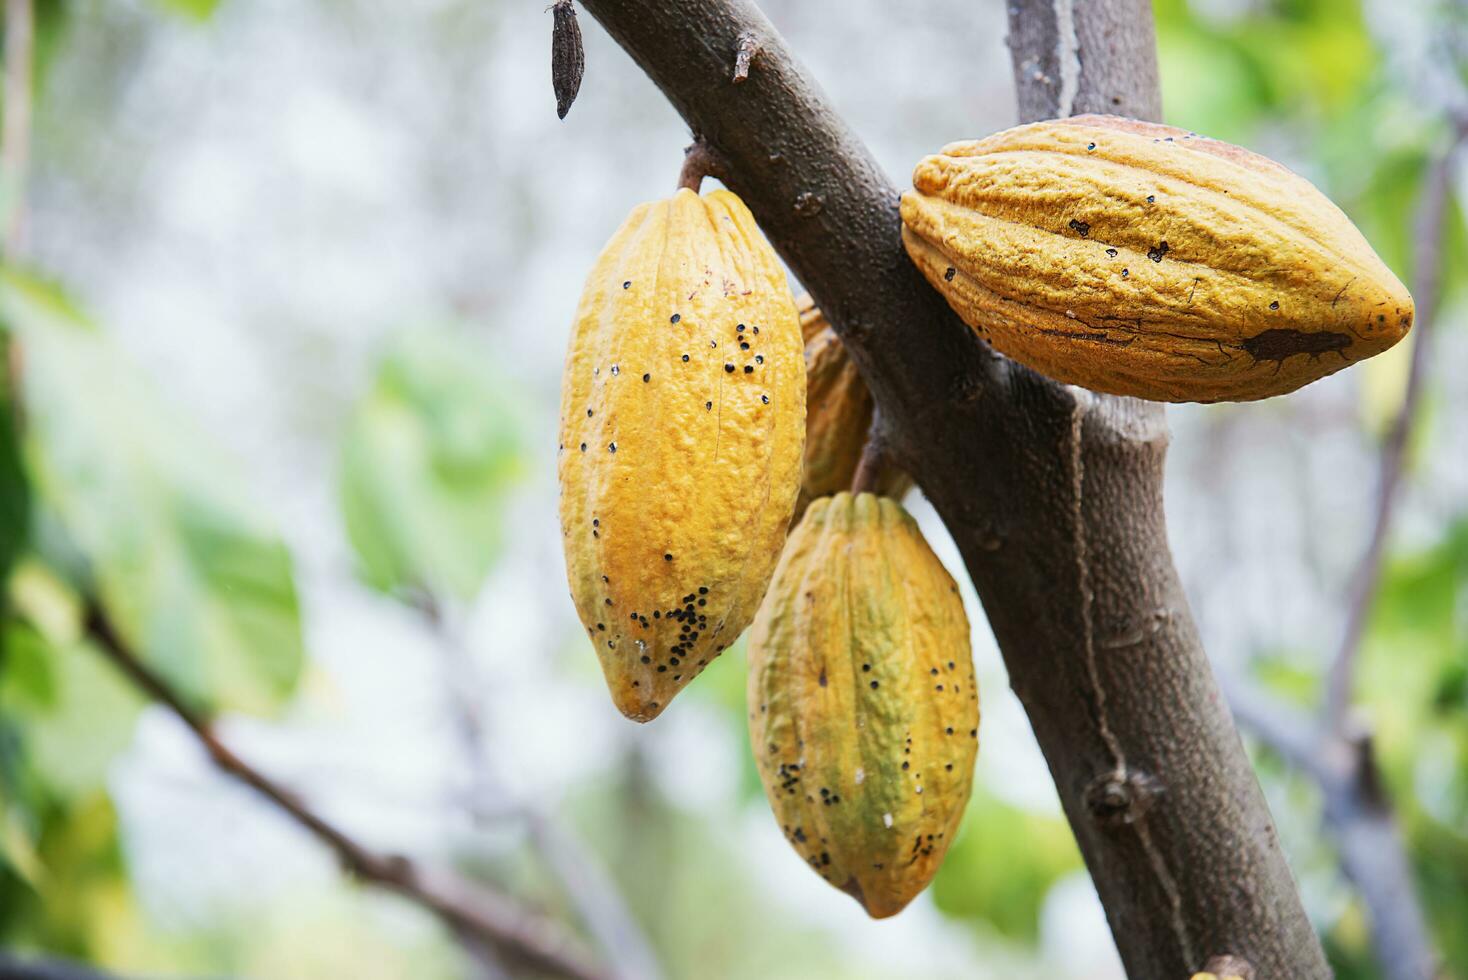 cacao Fruta jardín, tropical agrícola antecedentes foto